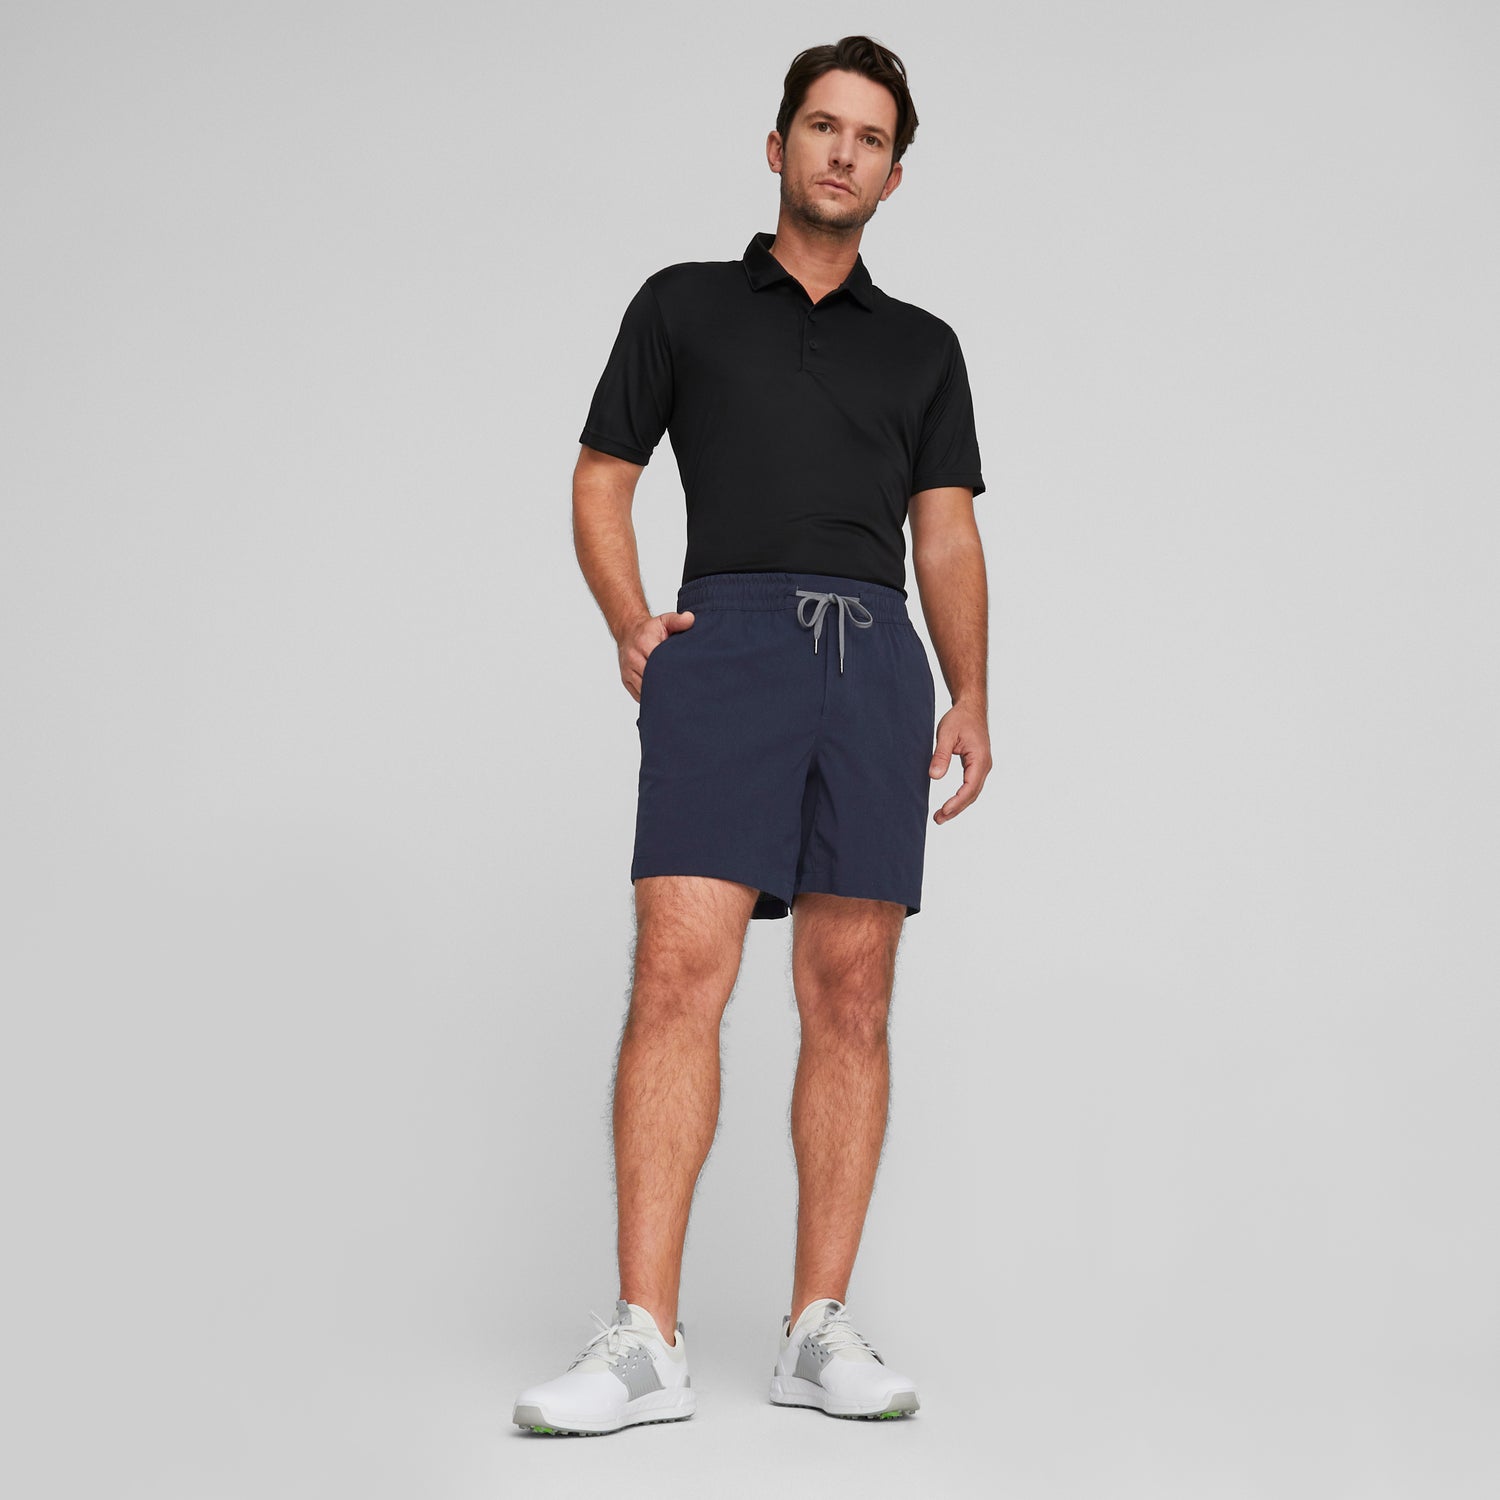 7 Inch Inseam Golf Shorts | Avalon Men's Performance Golf Shorts